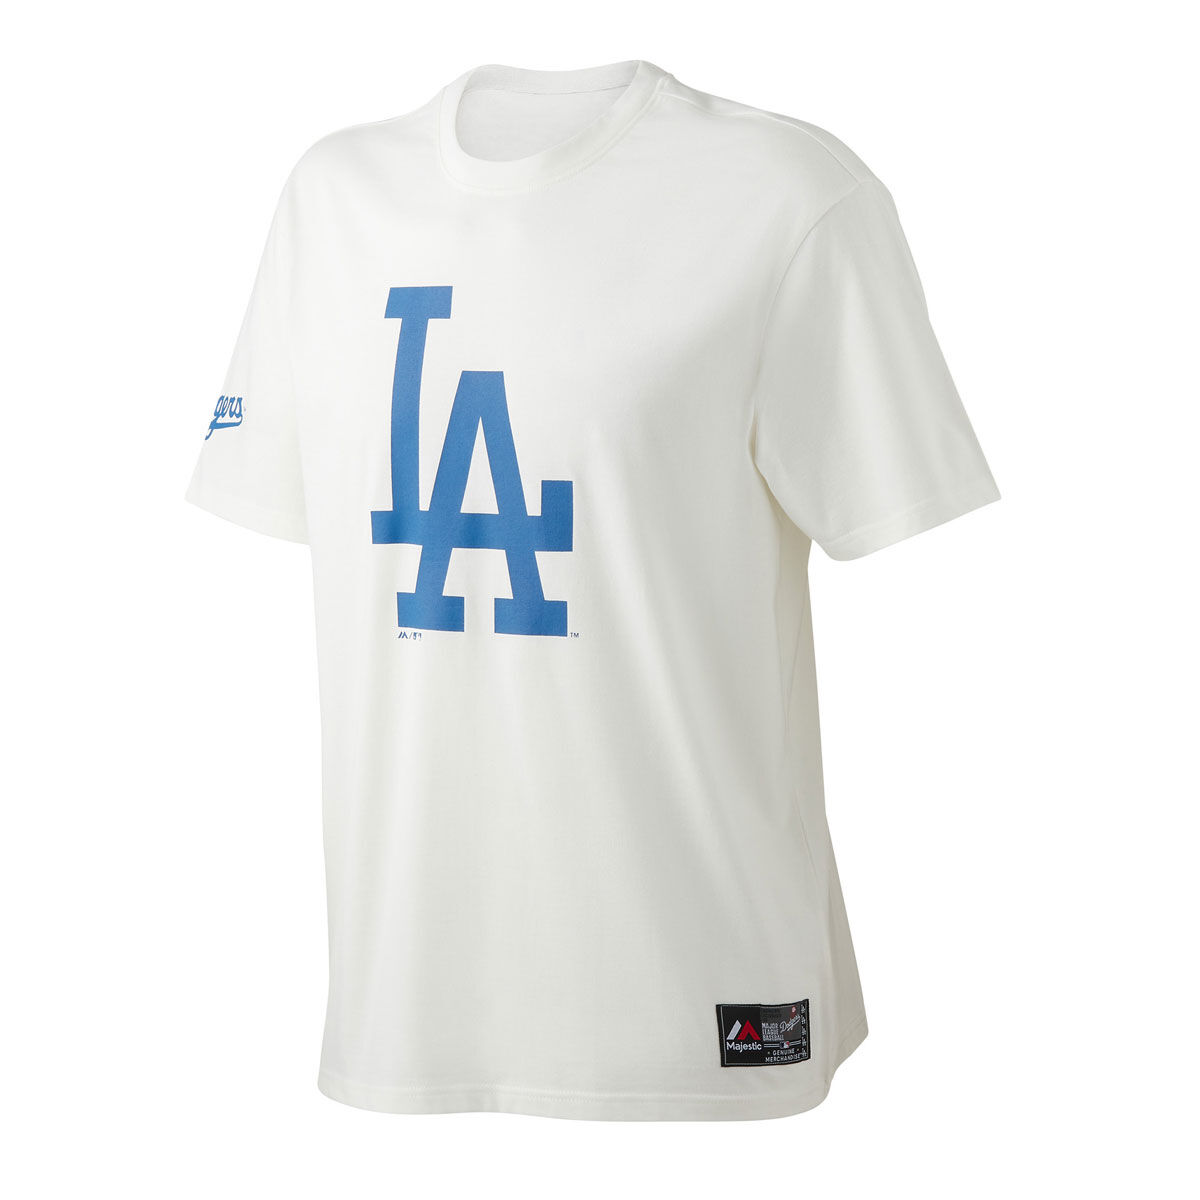 Majestic, Shirts & Tops, La Dodgers 3t Jersey Kids Boy Girl